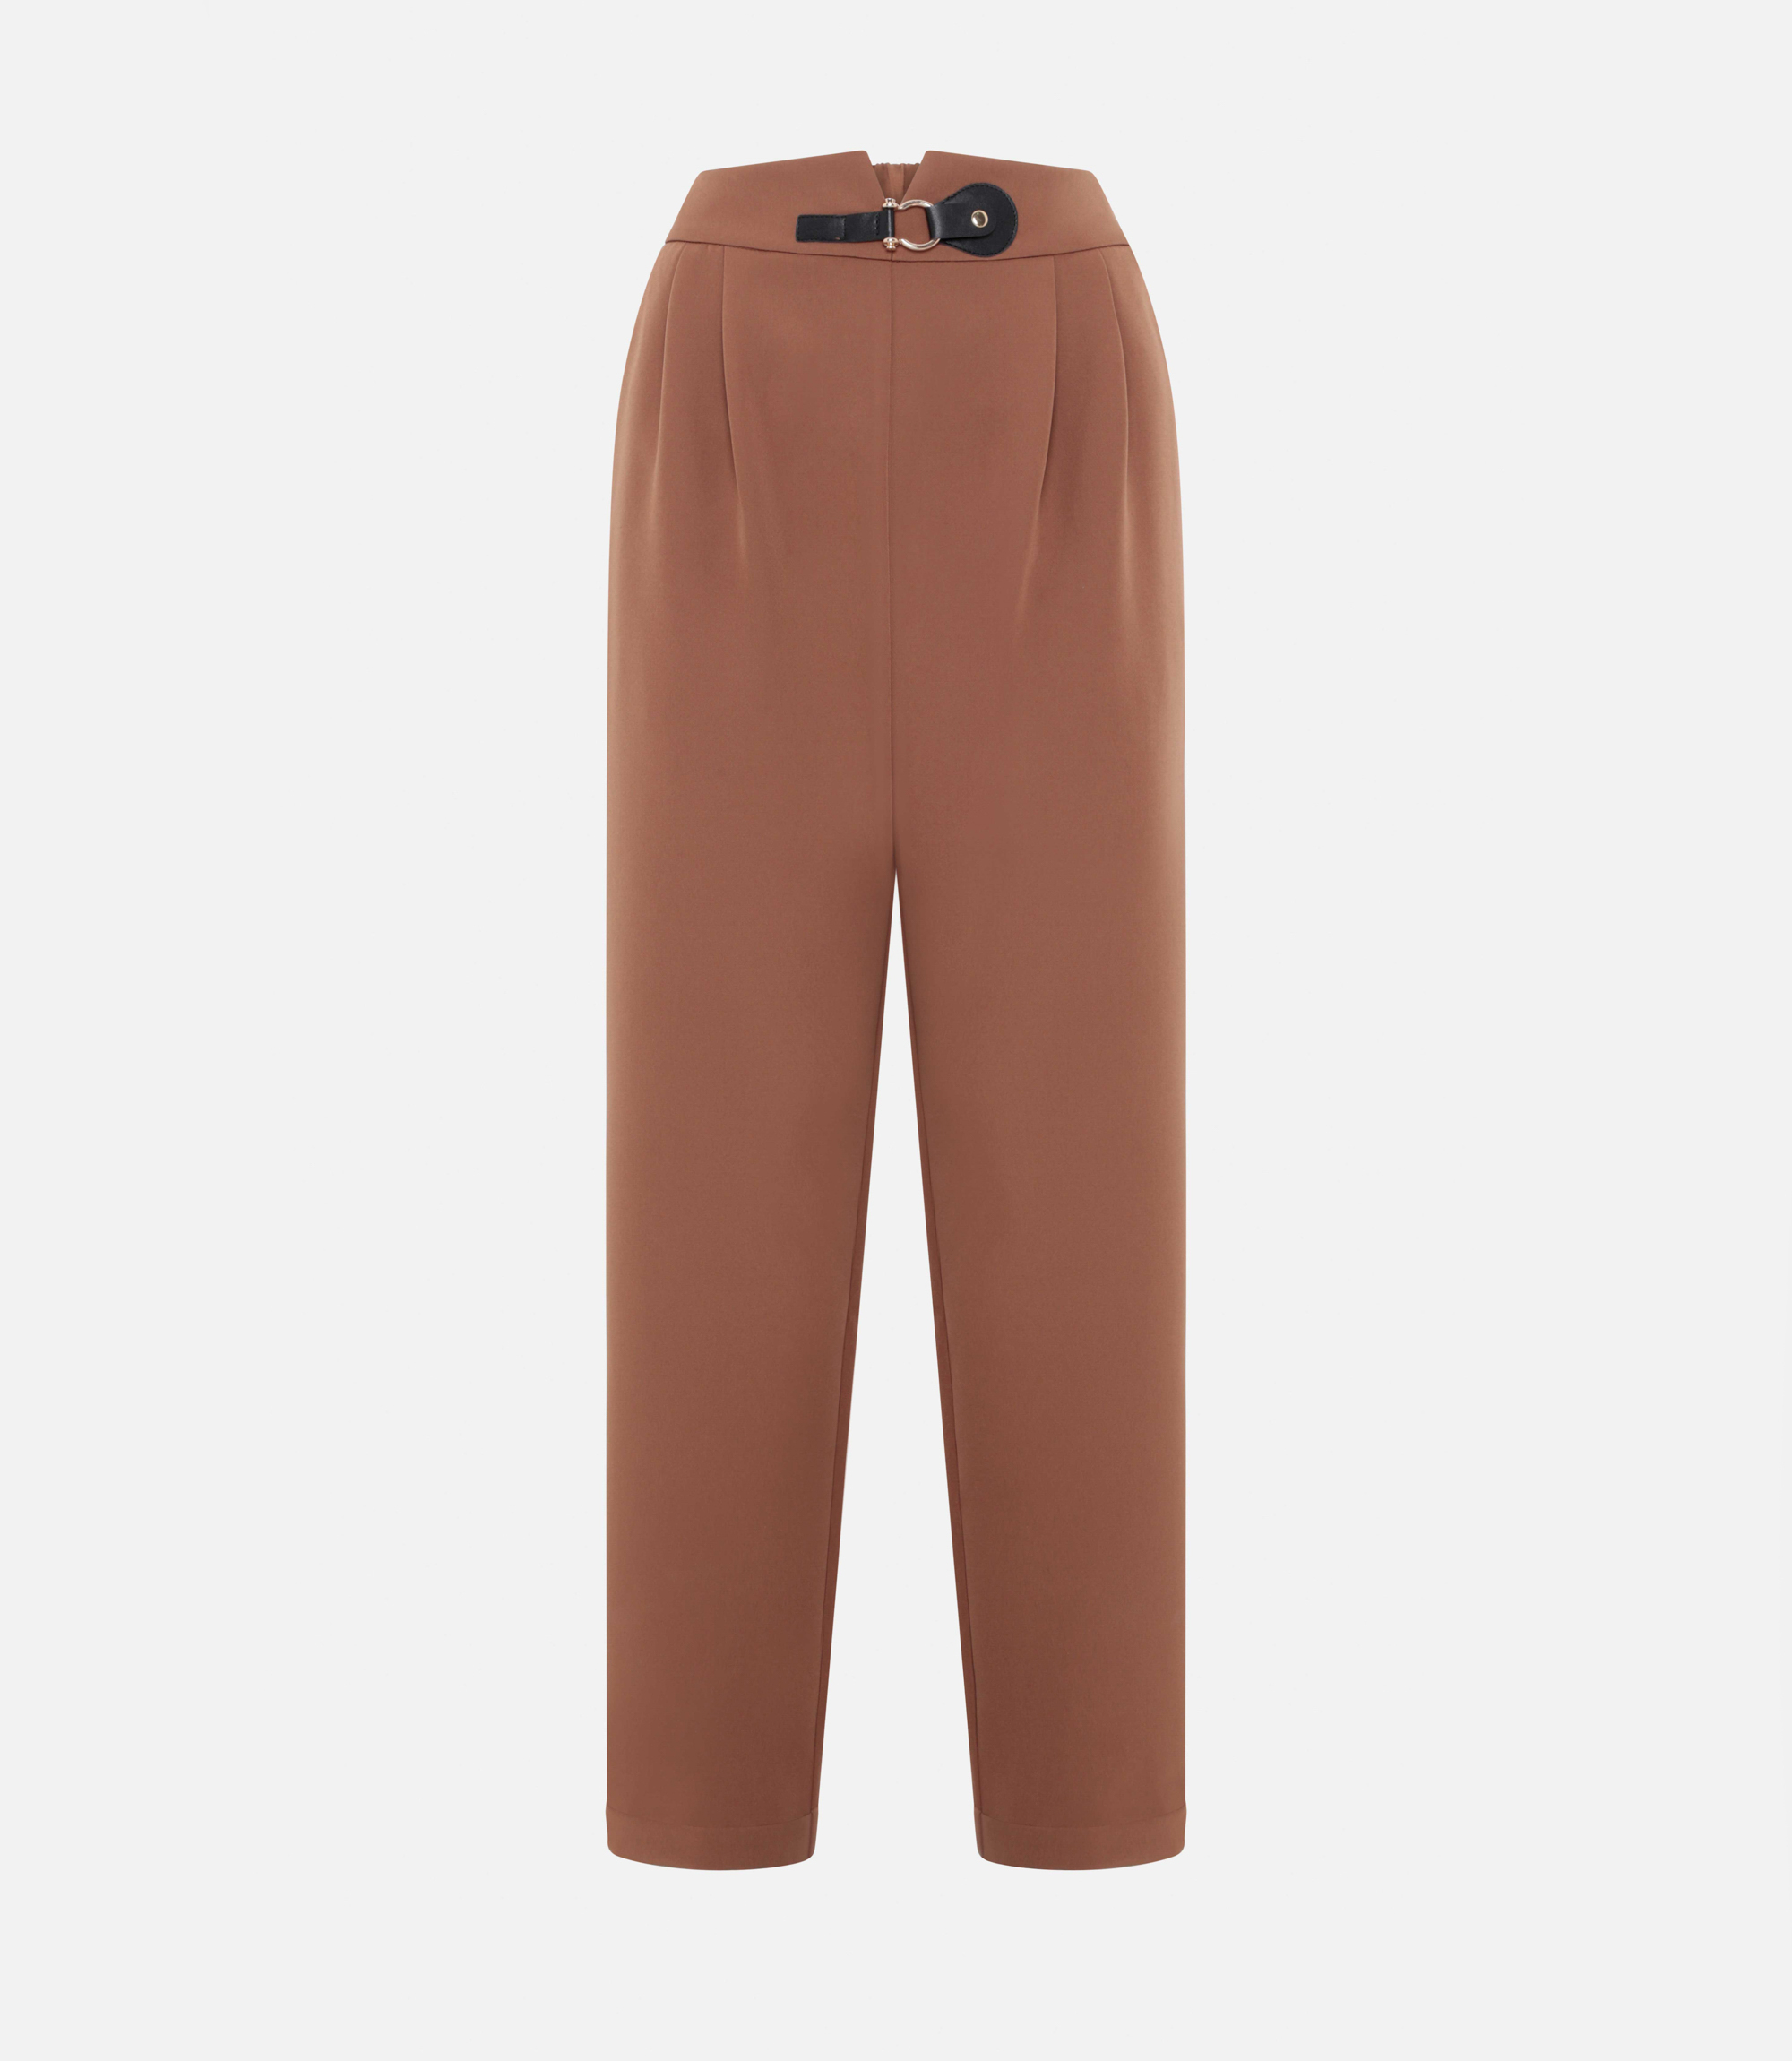 Buckle trousers - CLOTHING - Nara Milano